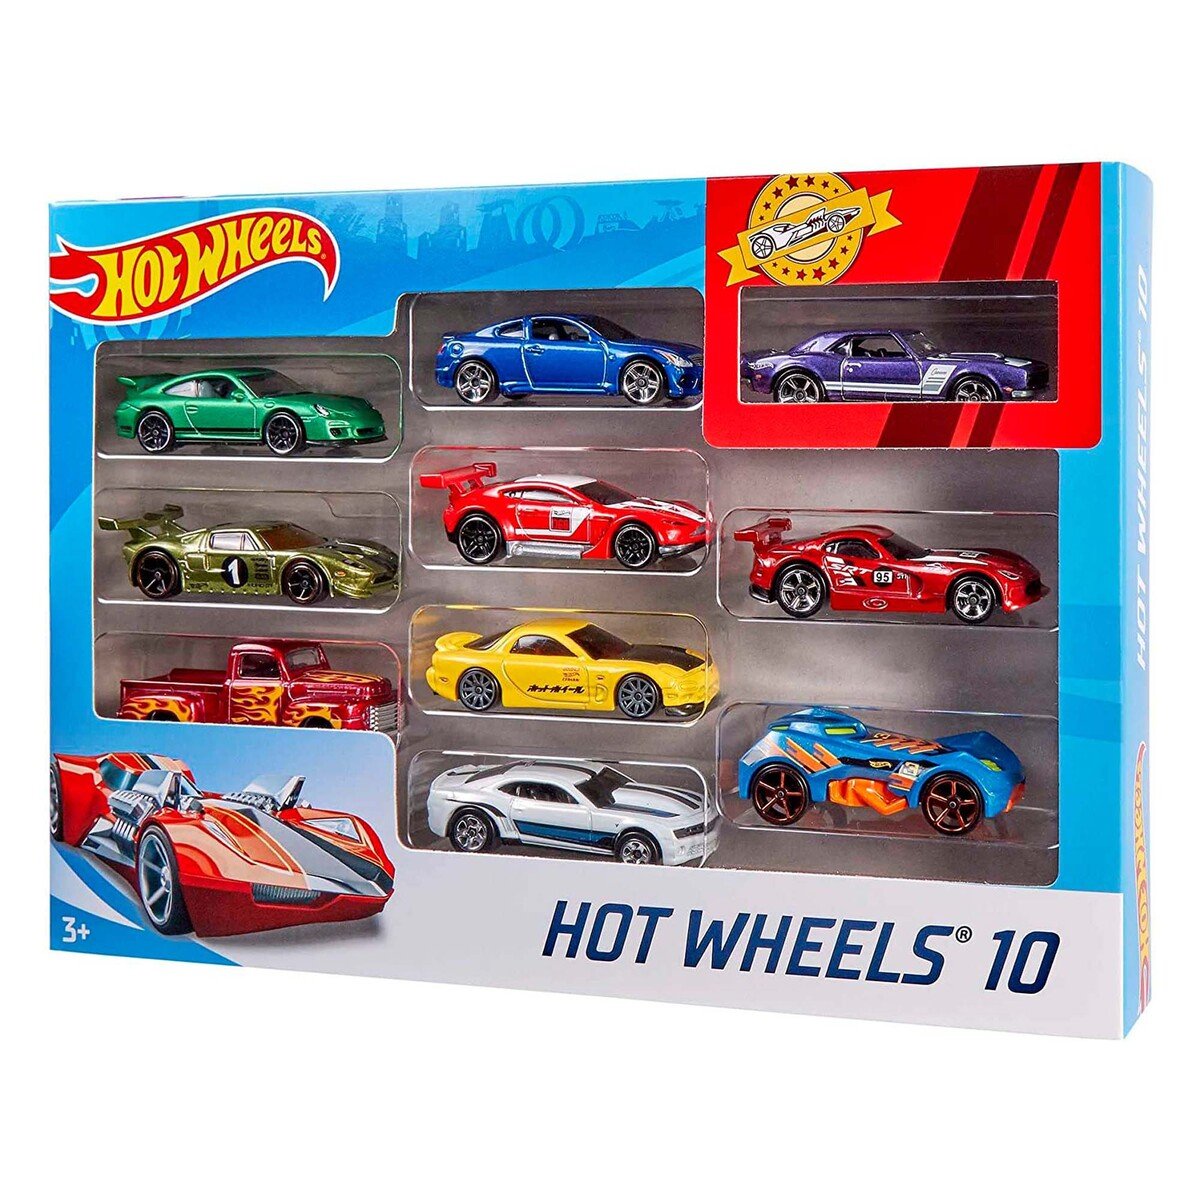 Hot Wheels Basic Cars, 10 Hot Wheels Car in 1 Pack 54886